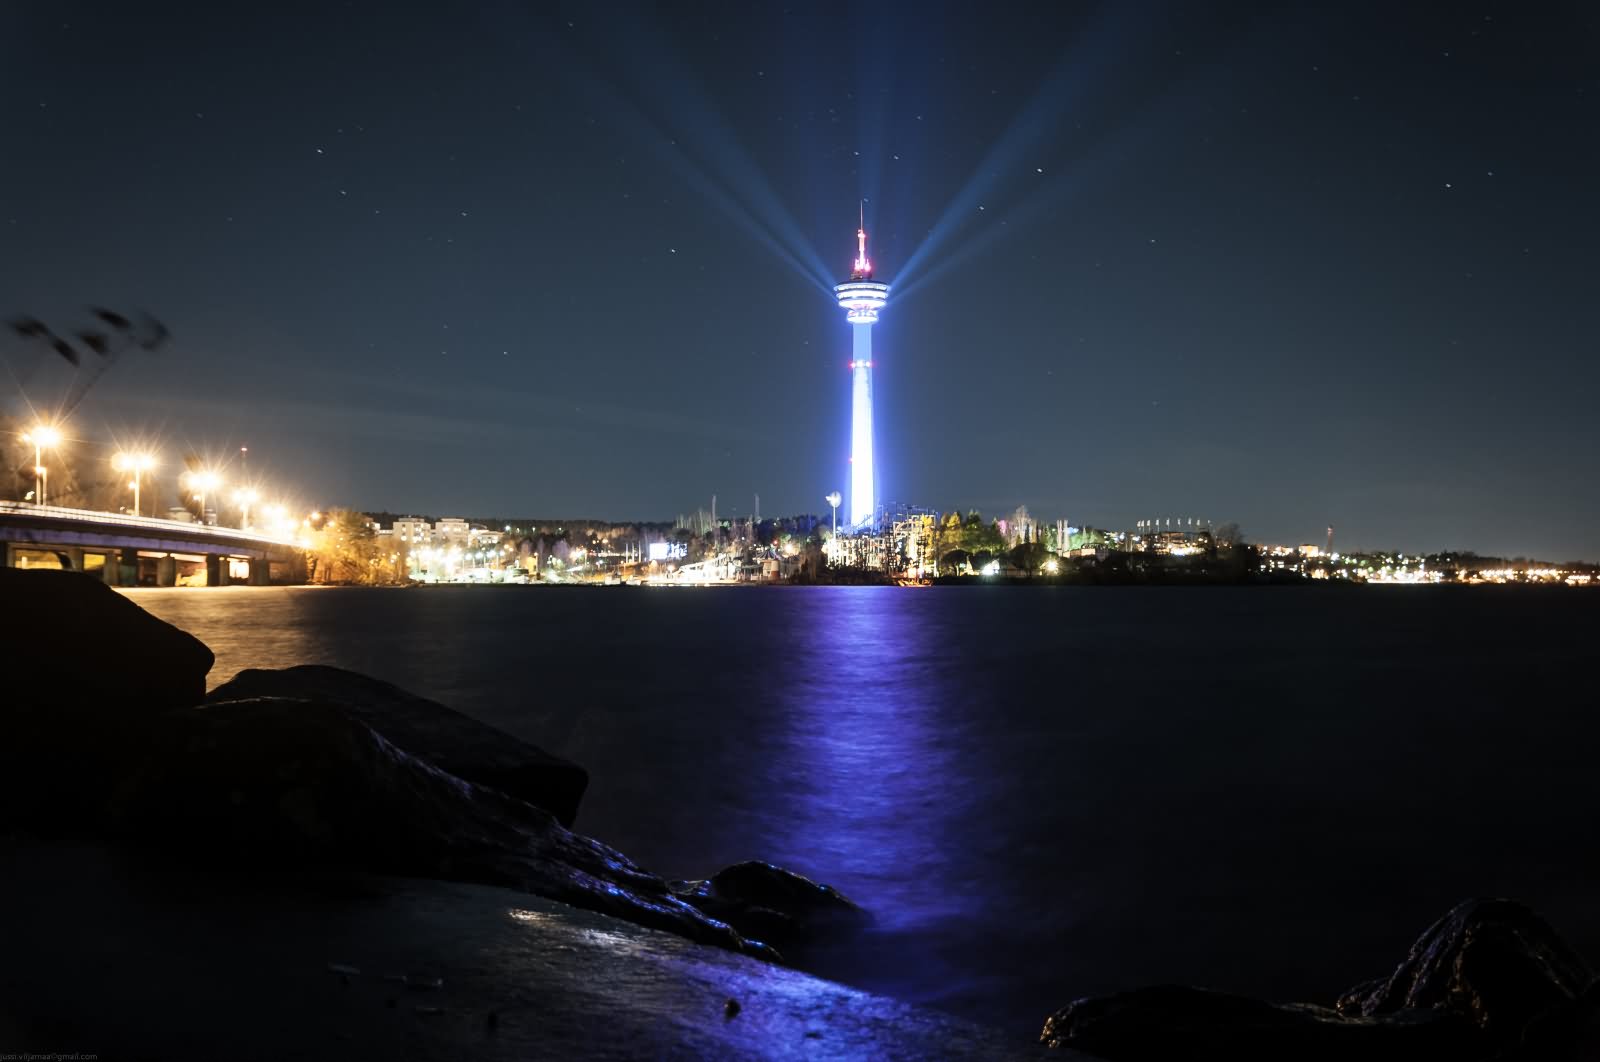 The Nasinneula Tower Illuminated At Night